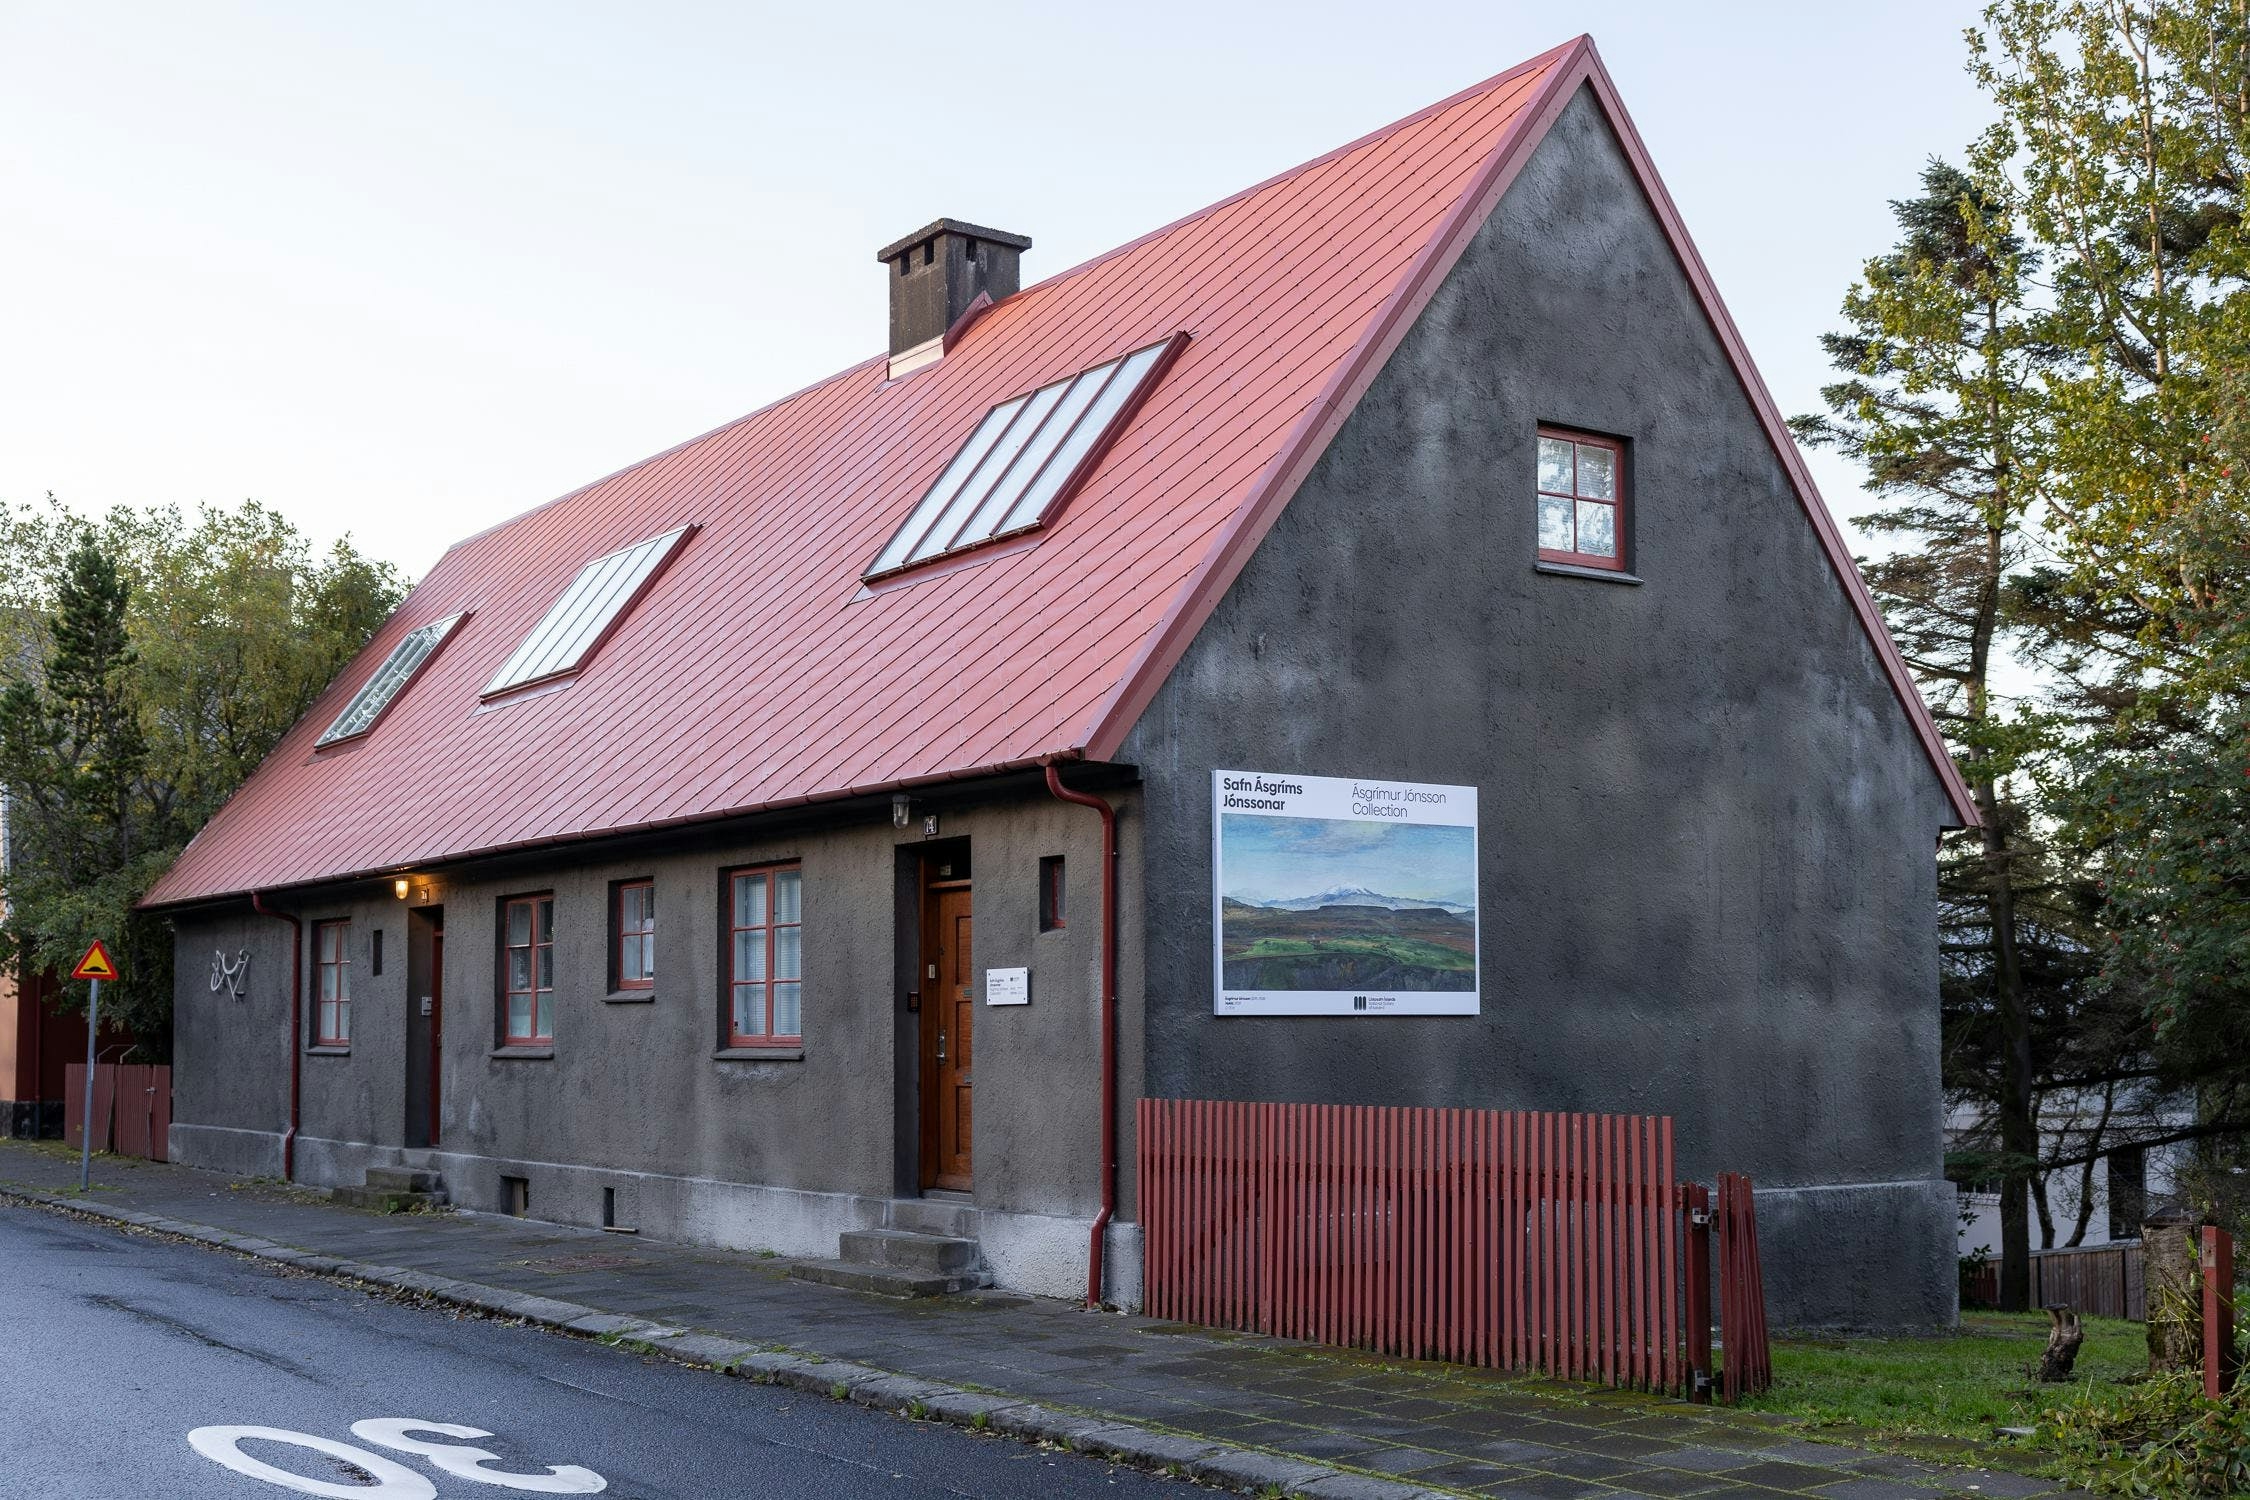 Home of an artist, Ásgrímur Jónsson